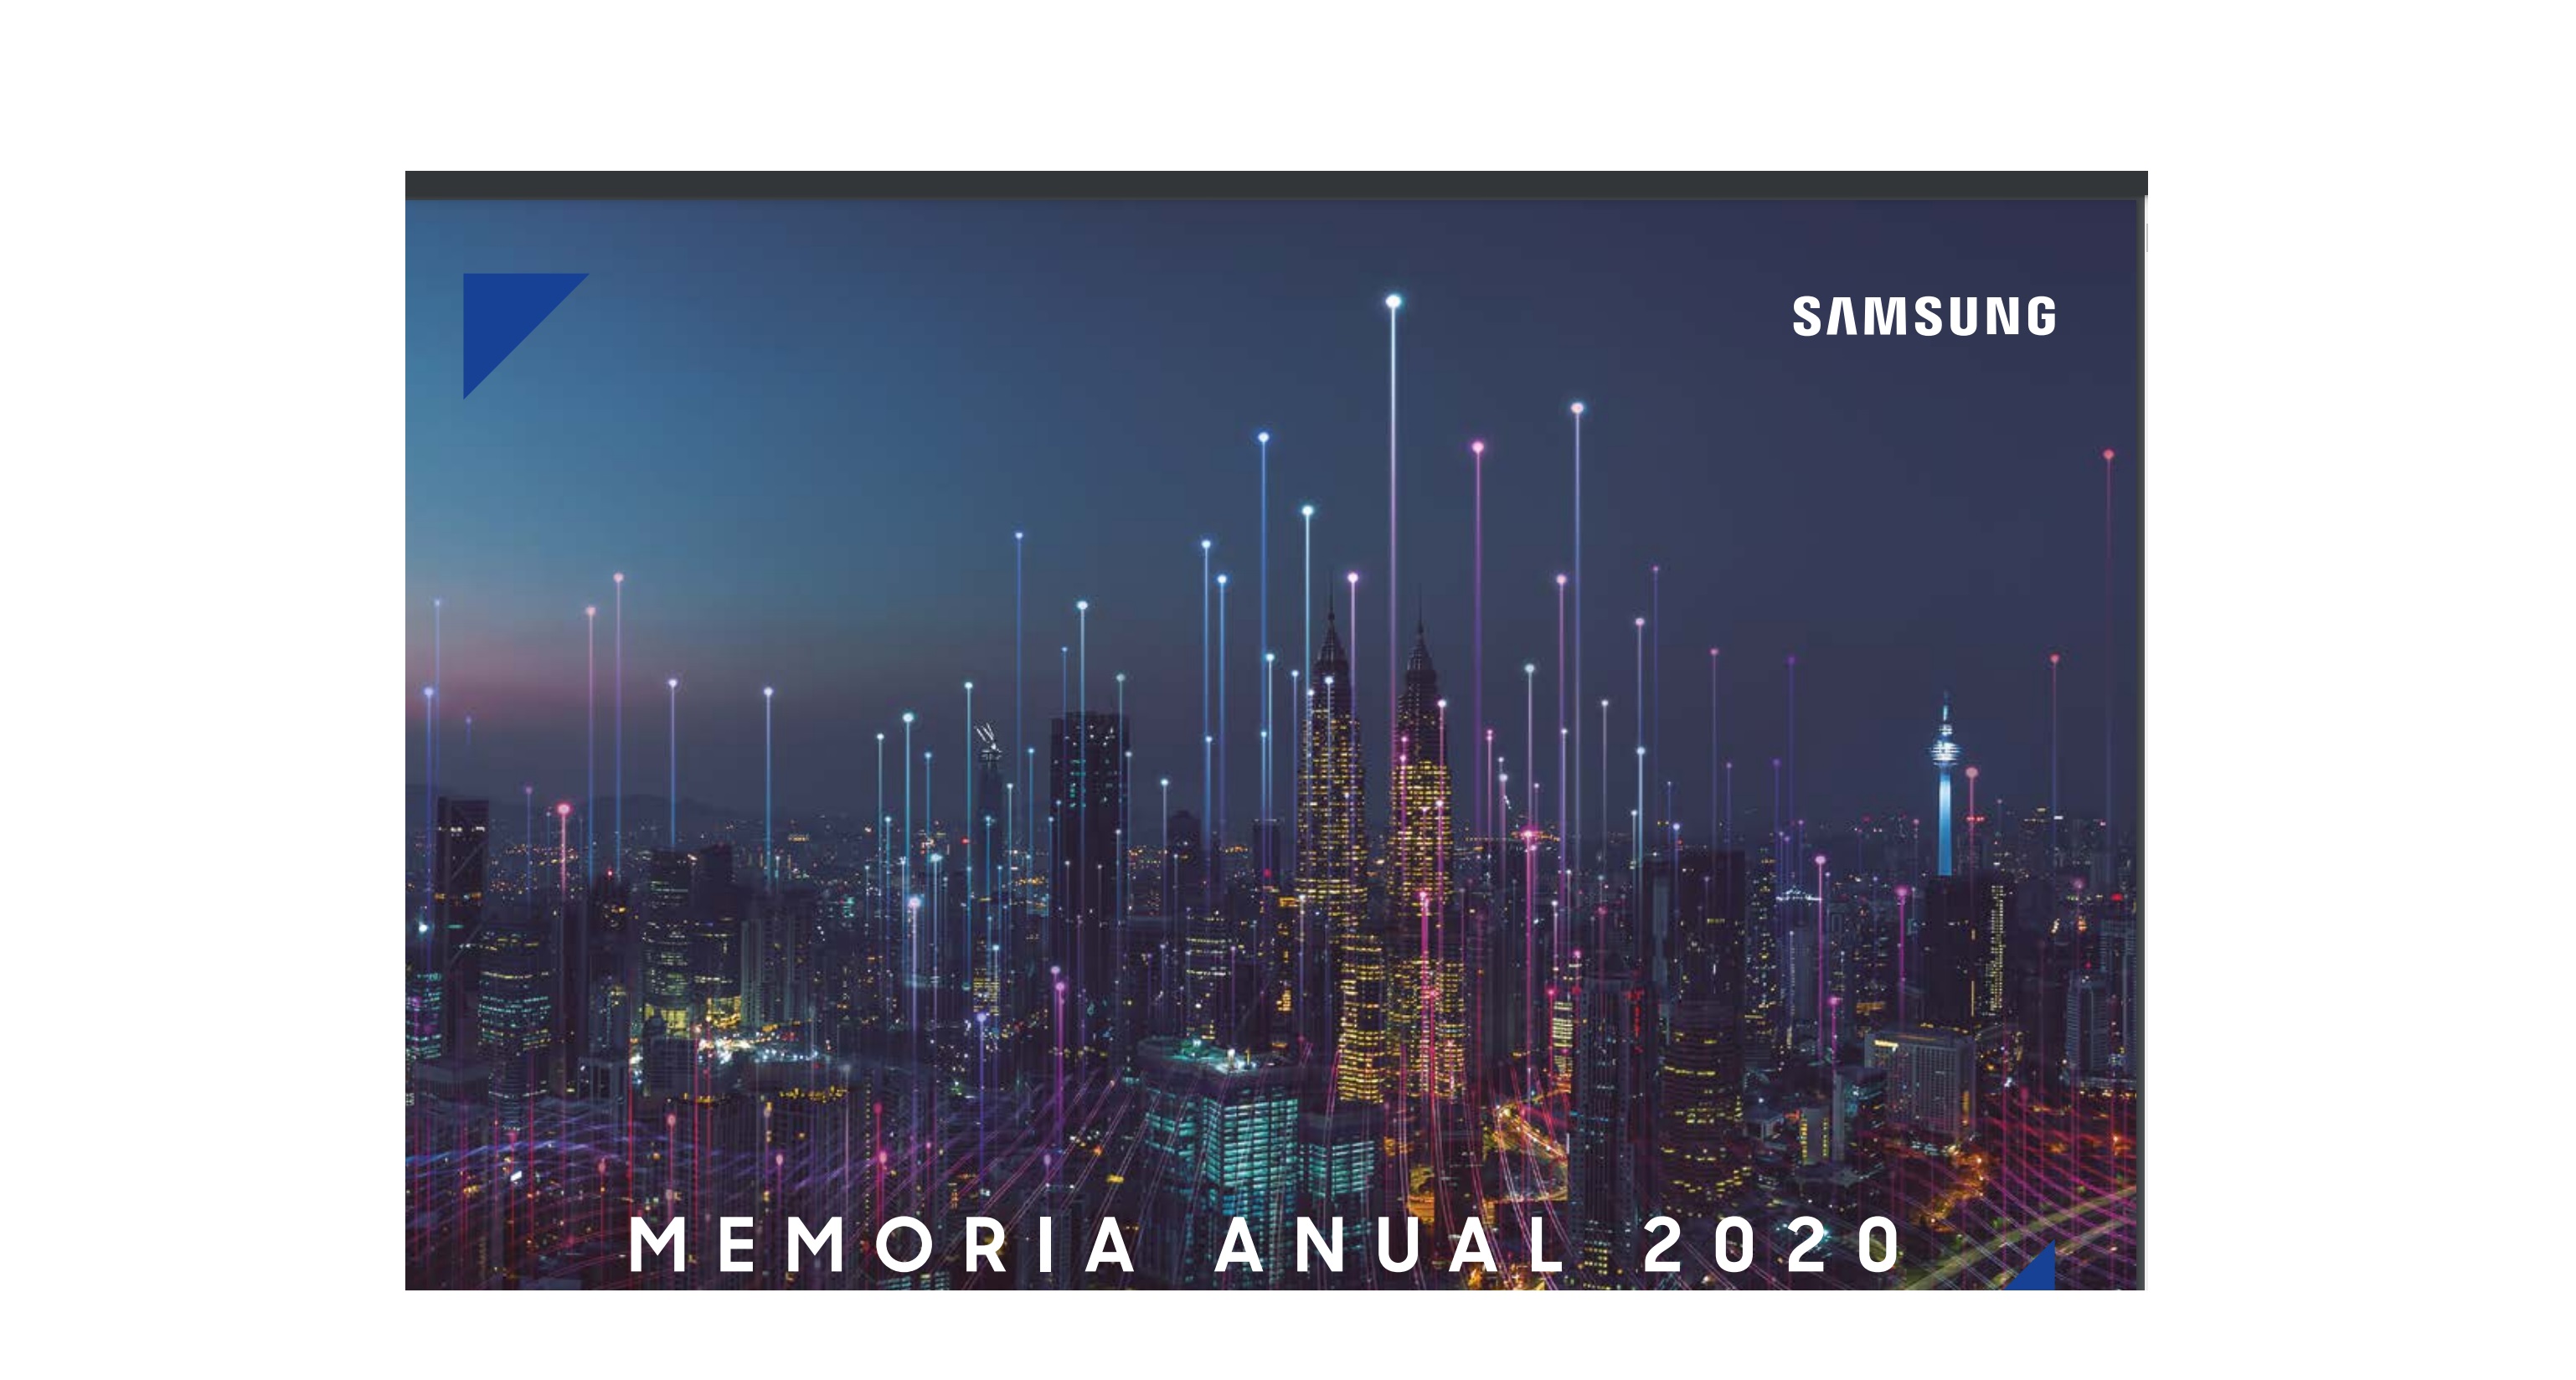 memoria, anucla 2020, samsung electronics ,programapublicidad